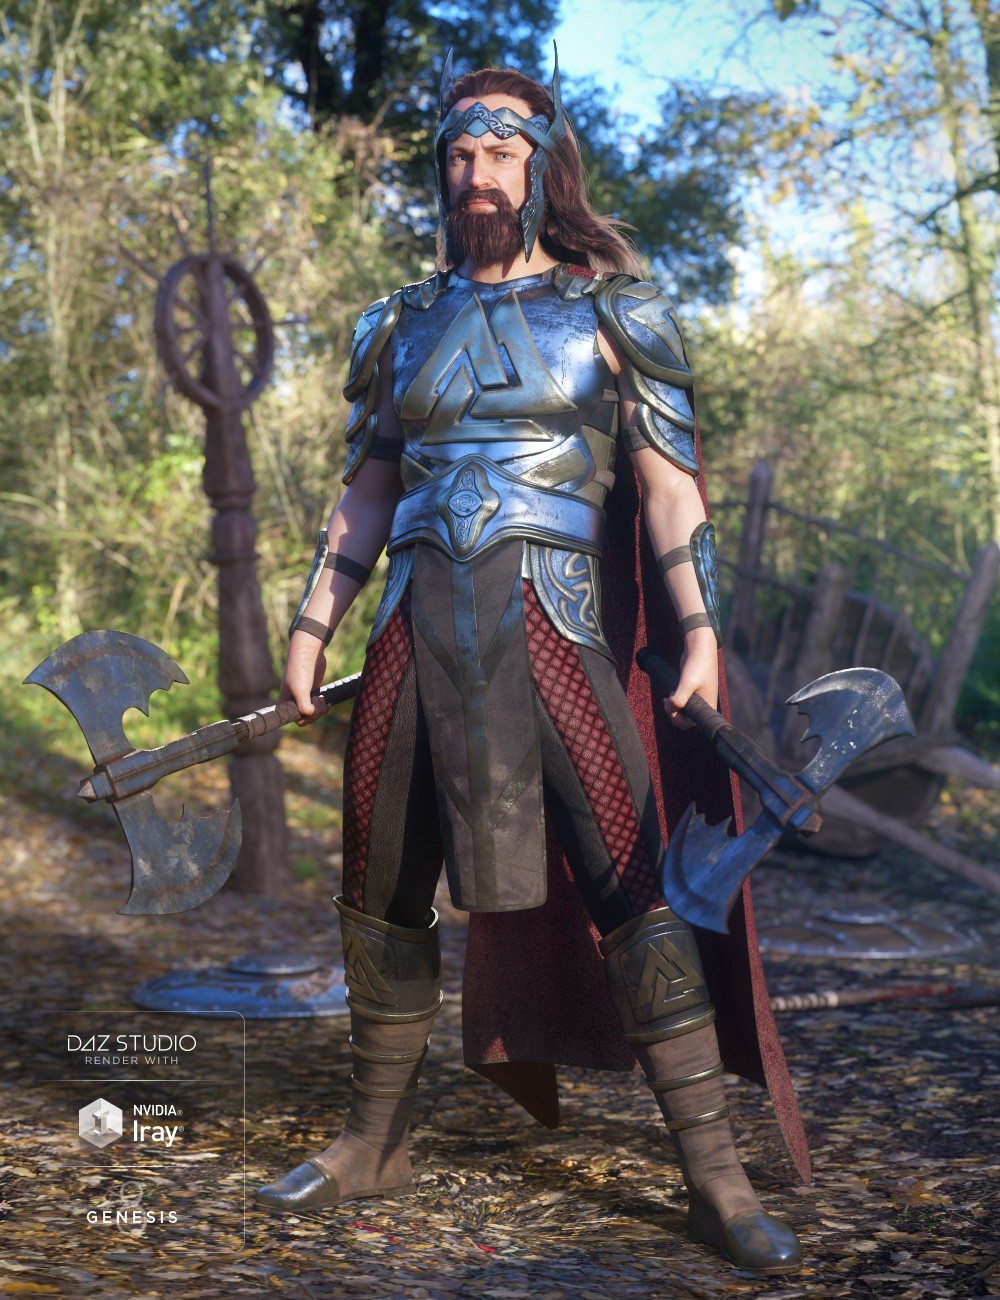 ArtStation - dForce Warrior King Outfit for Genesis 8 Male